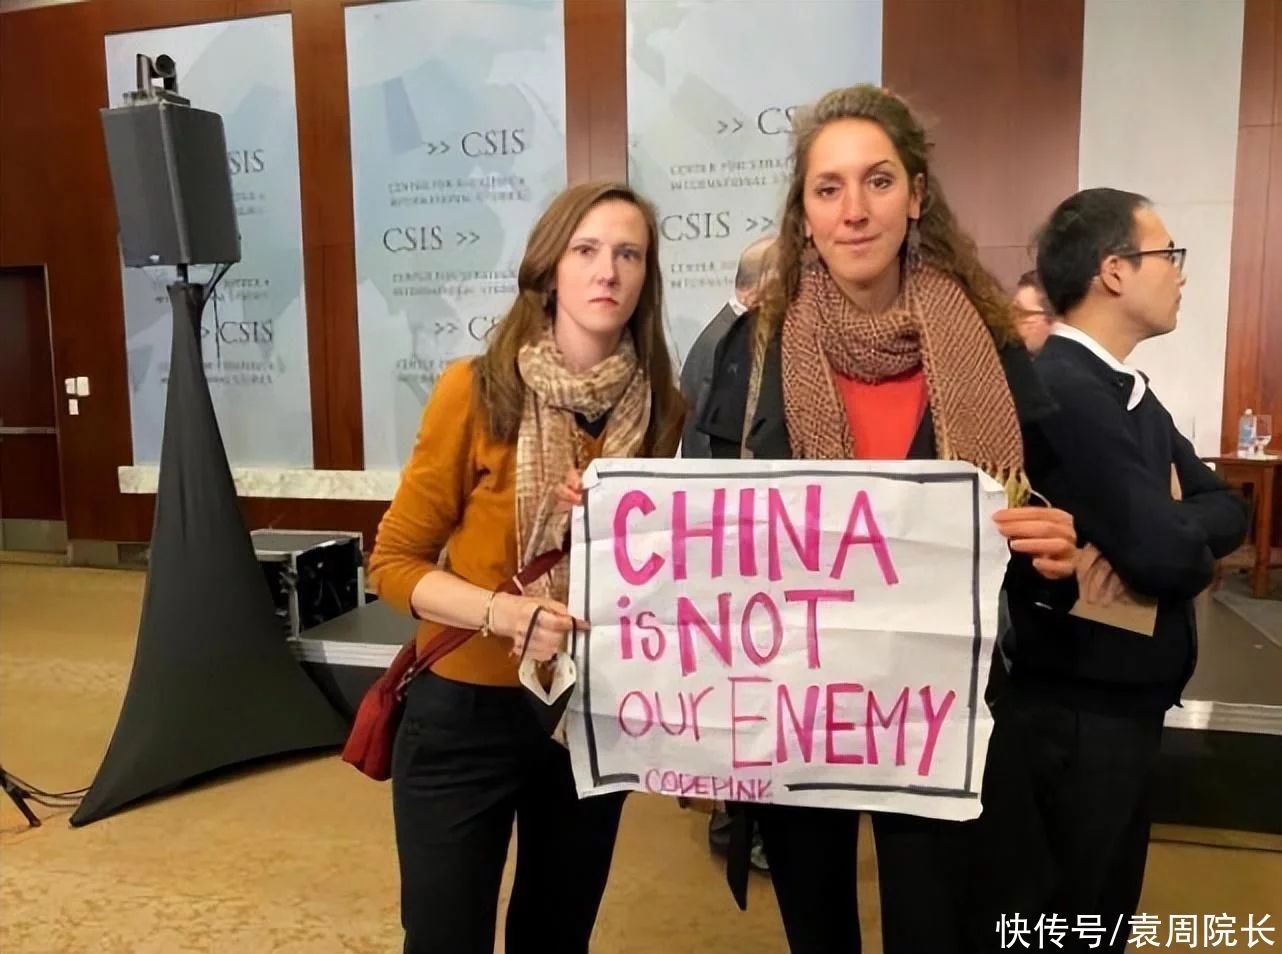 <b>为何要针对中国？女记者在美国智库会场发难，</b>